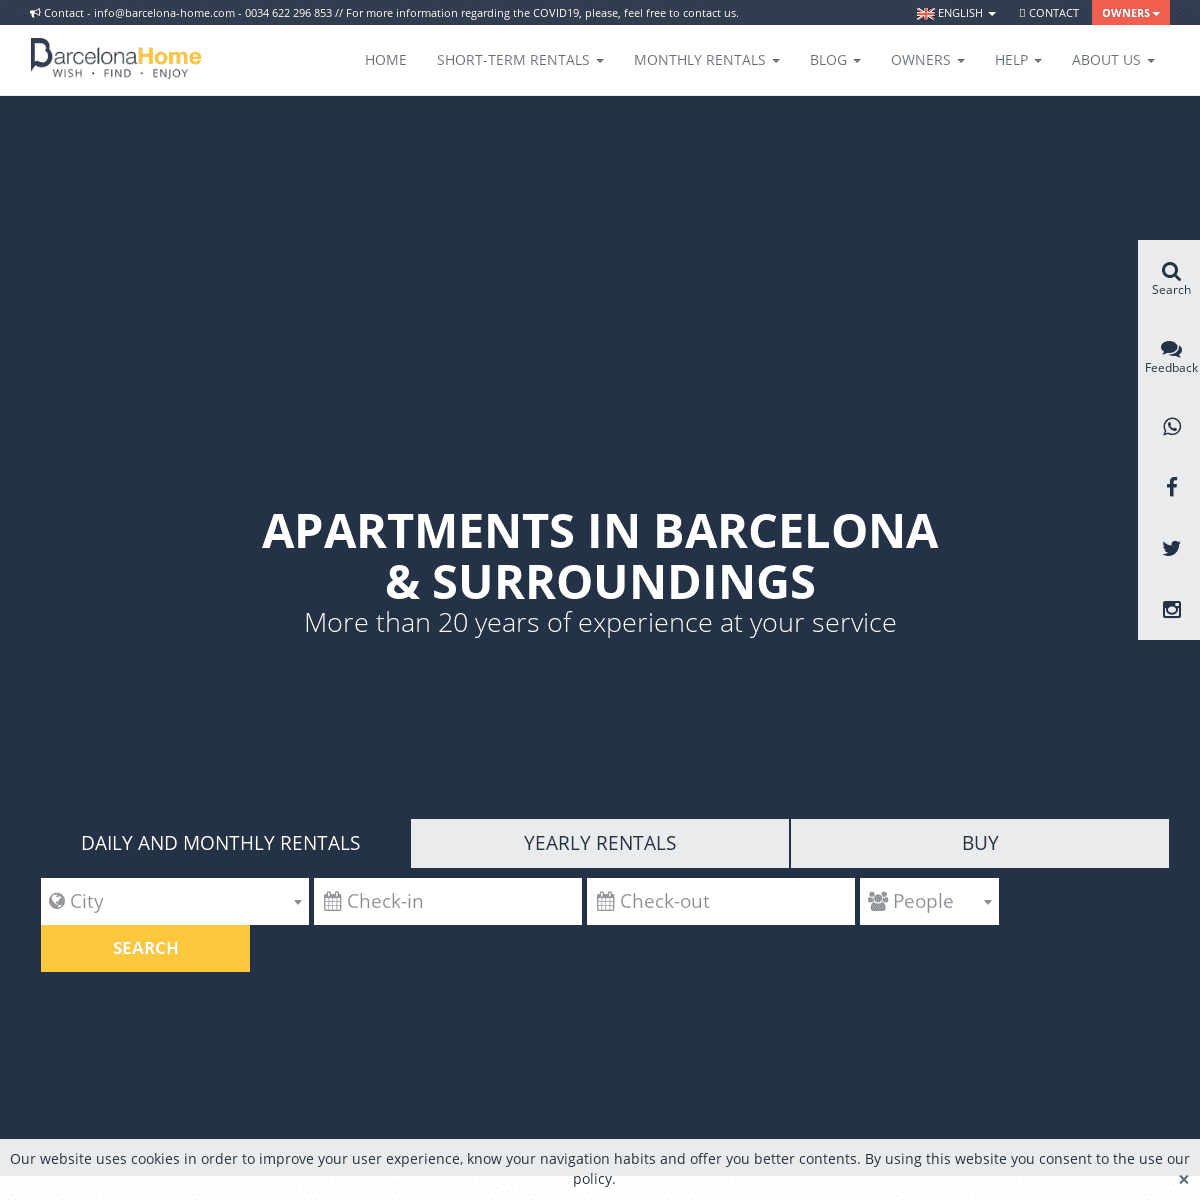 A complete backup of https://barcelona-home.com